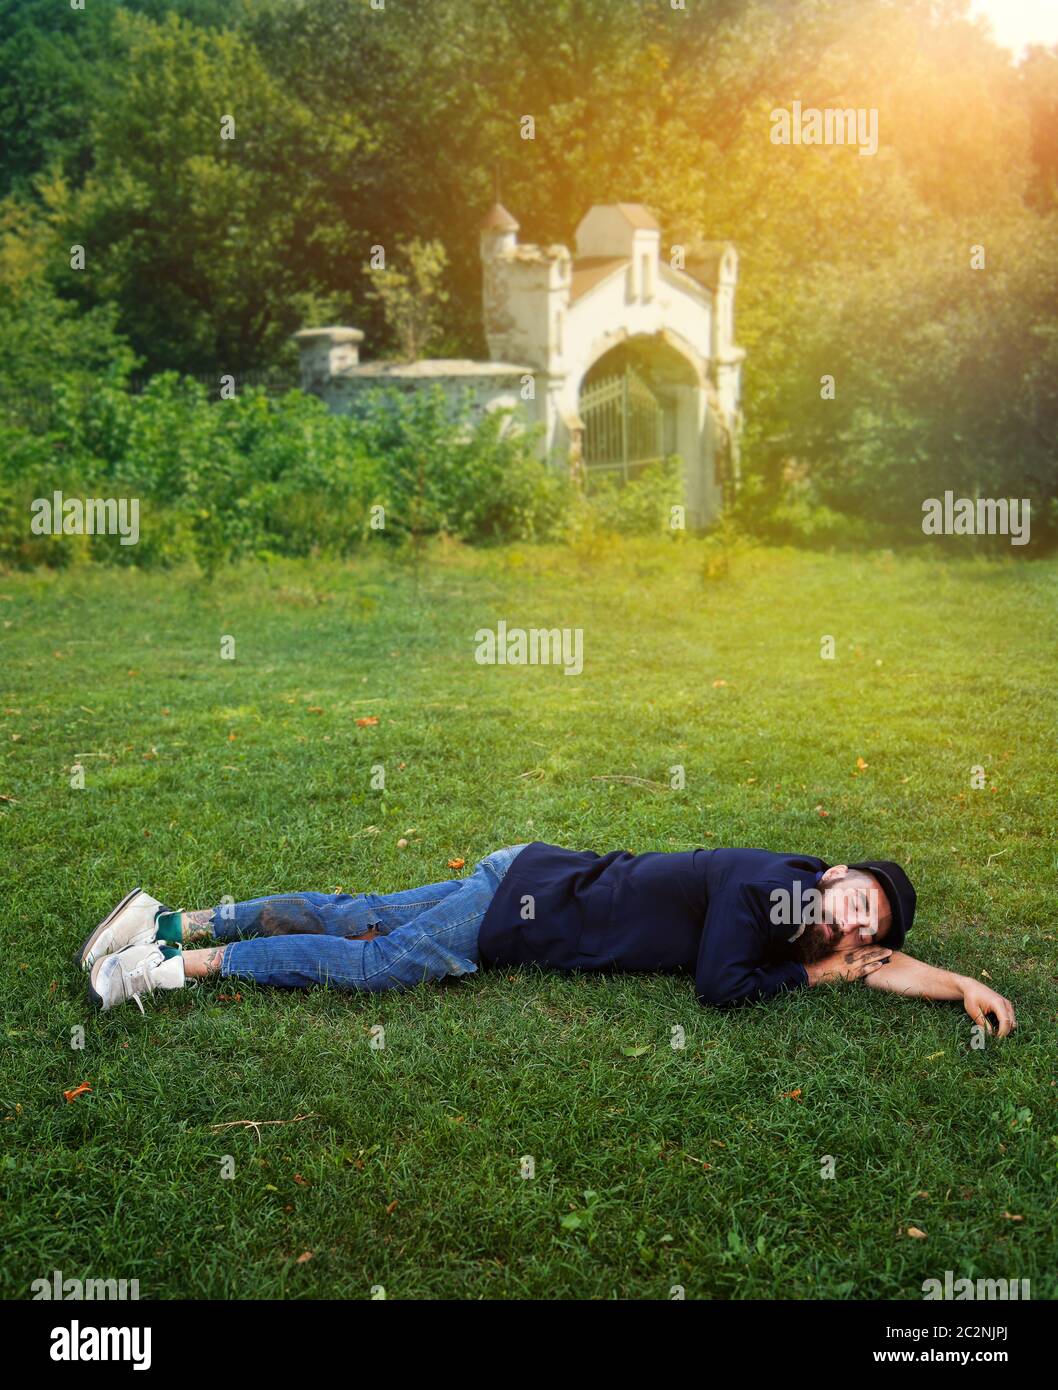 Homeless man sleeping on the green lawn Stock Photo